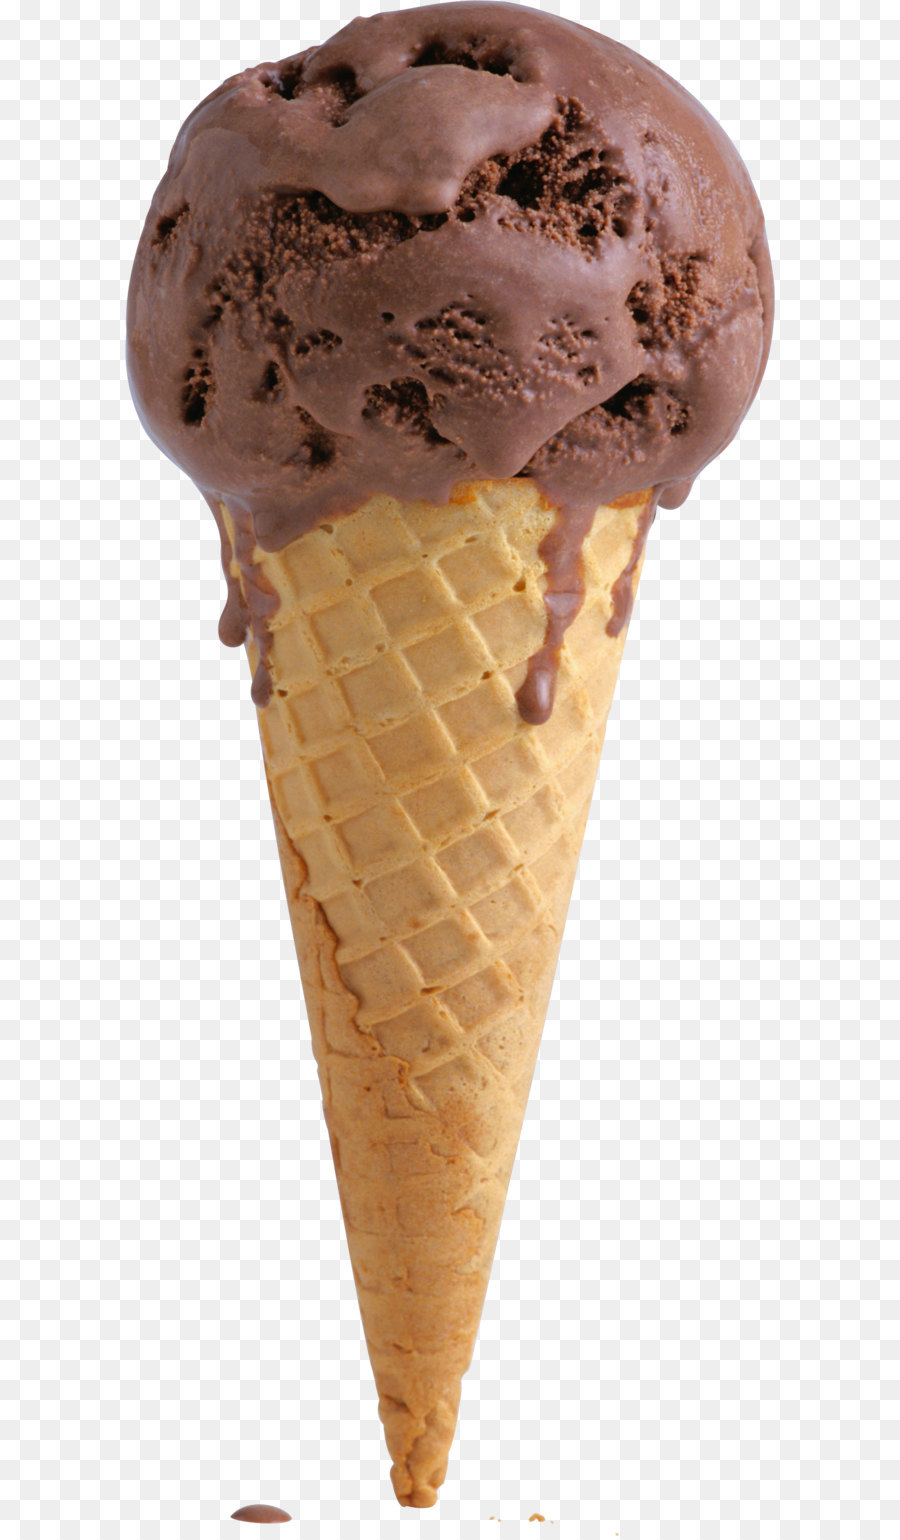 Chocolate ice cream Milkshake Ice cream cone - Chocolate Ice cream PNG image png download - 1450*3426 - Free Transparent Ice Cream png Download.